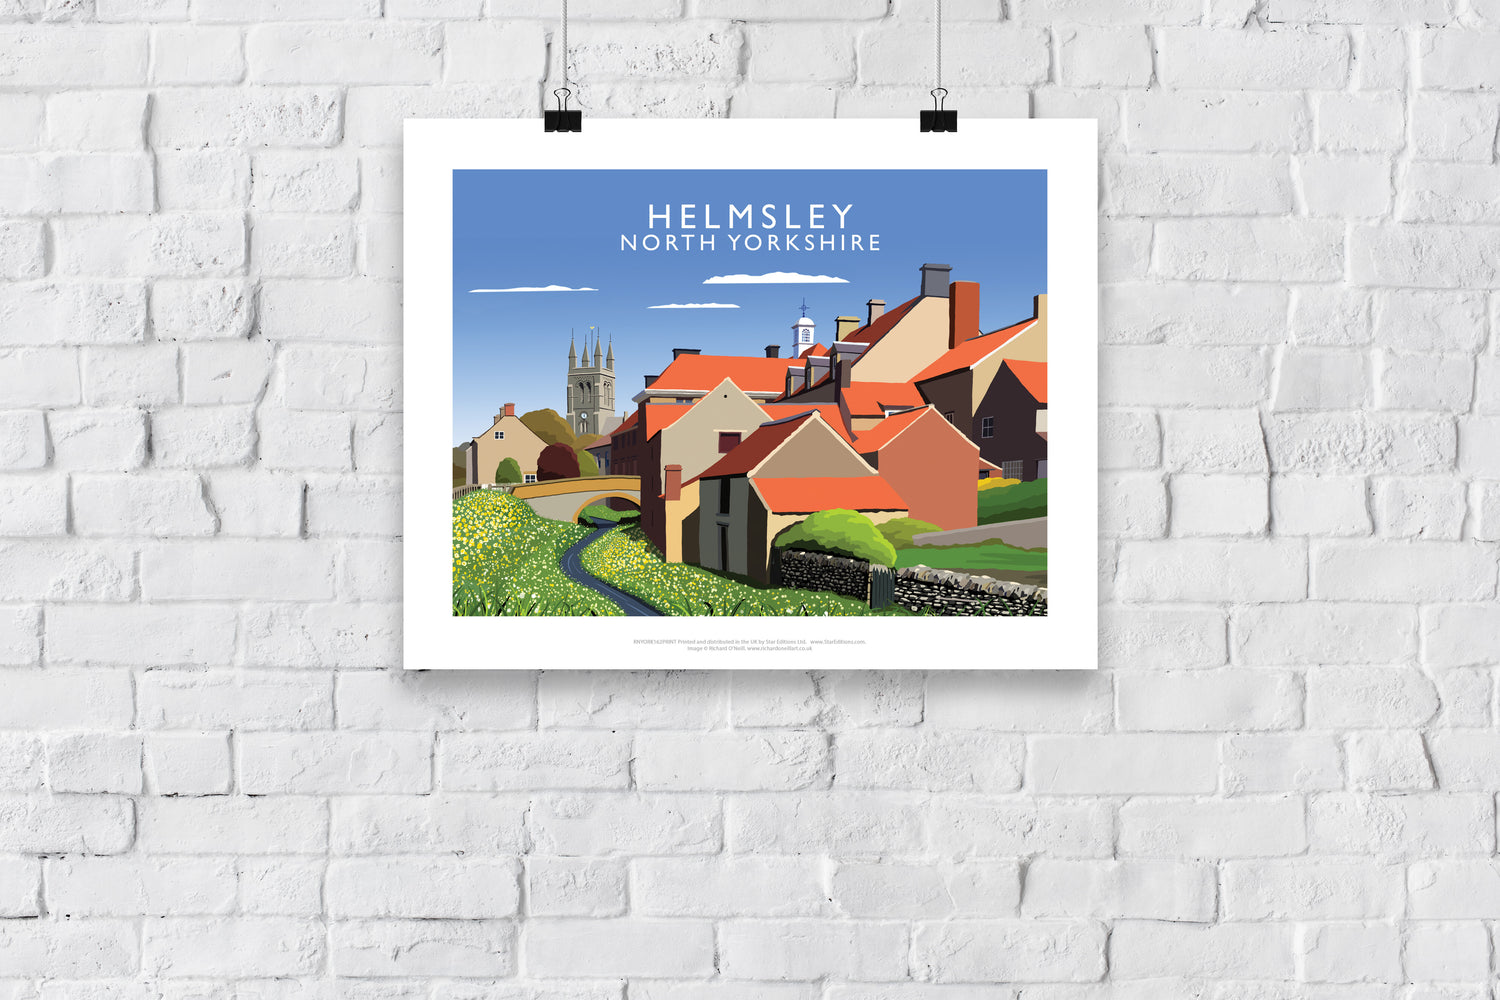 Helmsley, North Yorkshire - Art Print